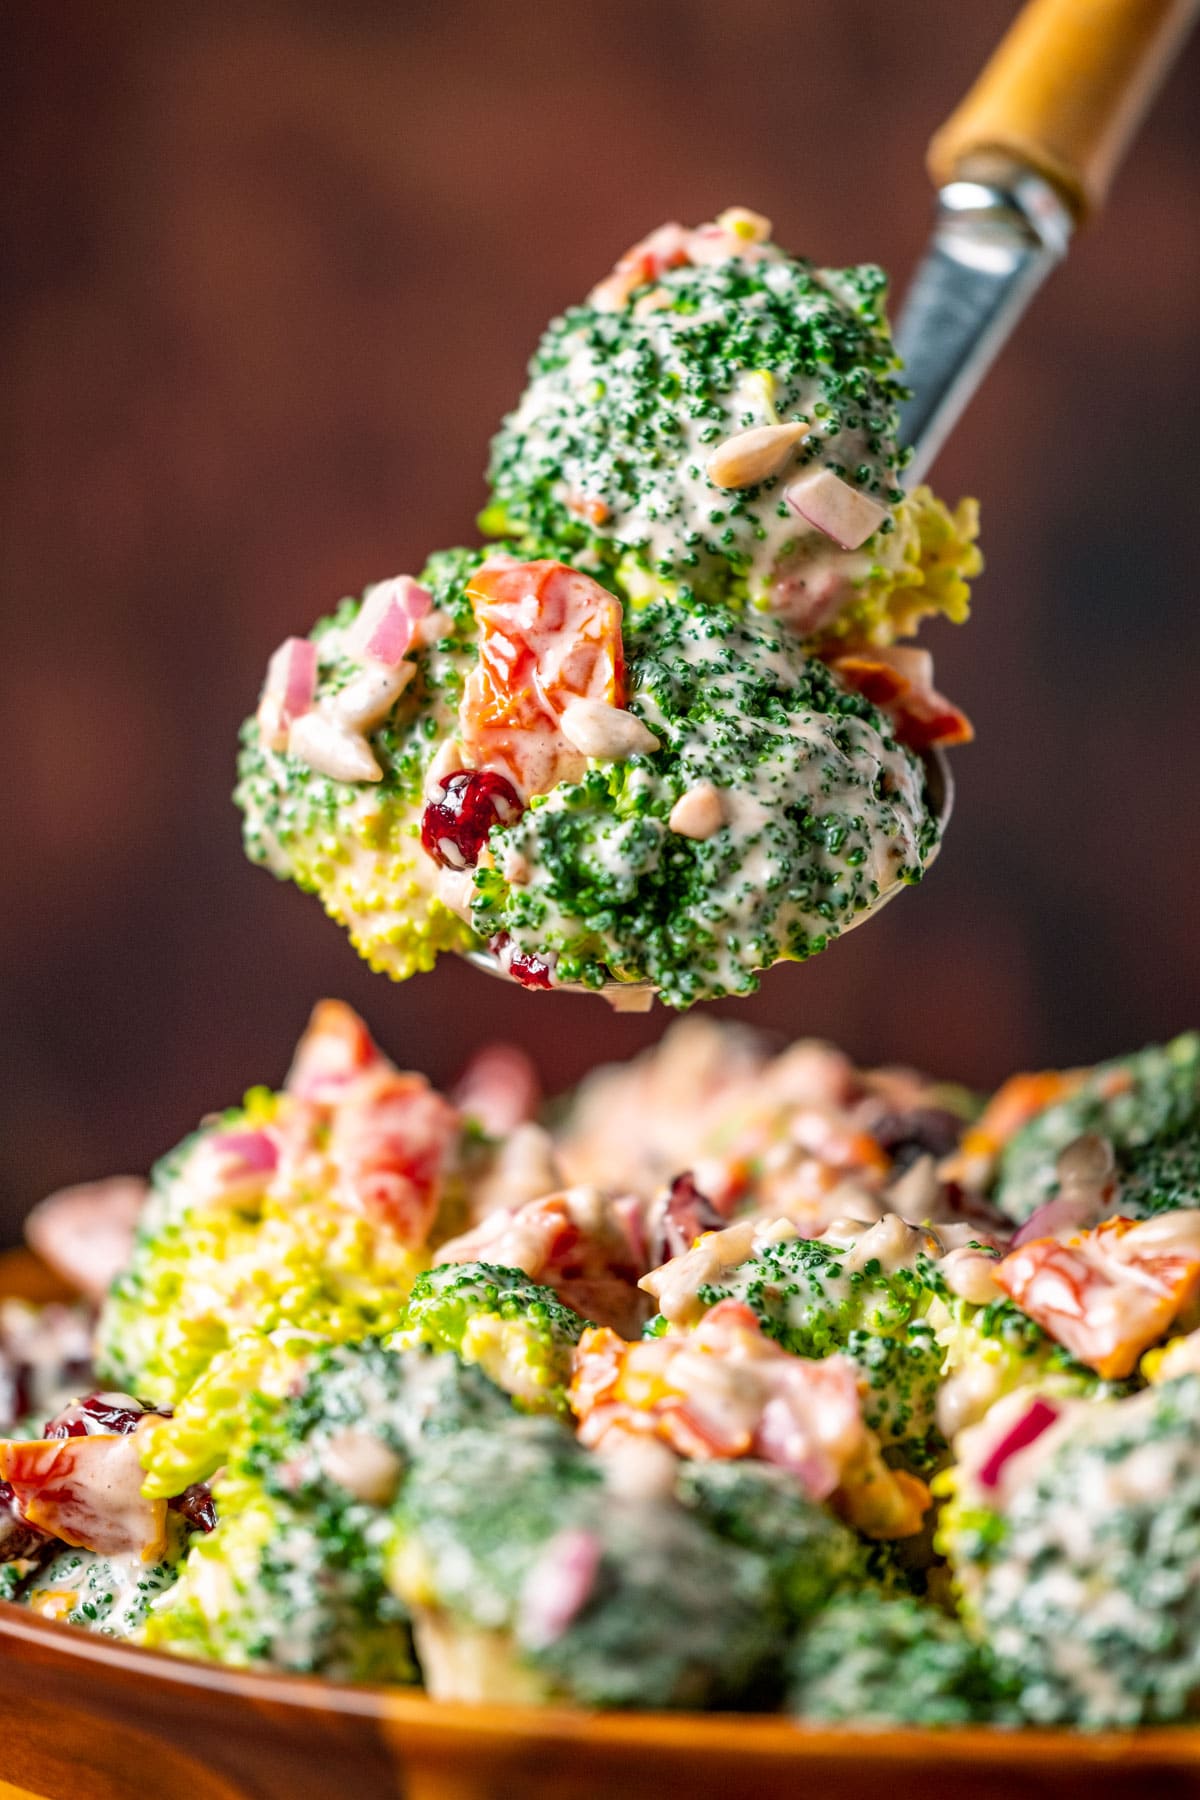 Forkful of vegan broccoli salad.